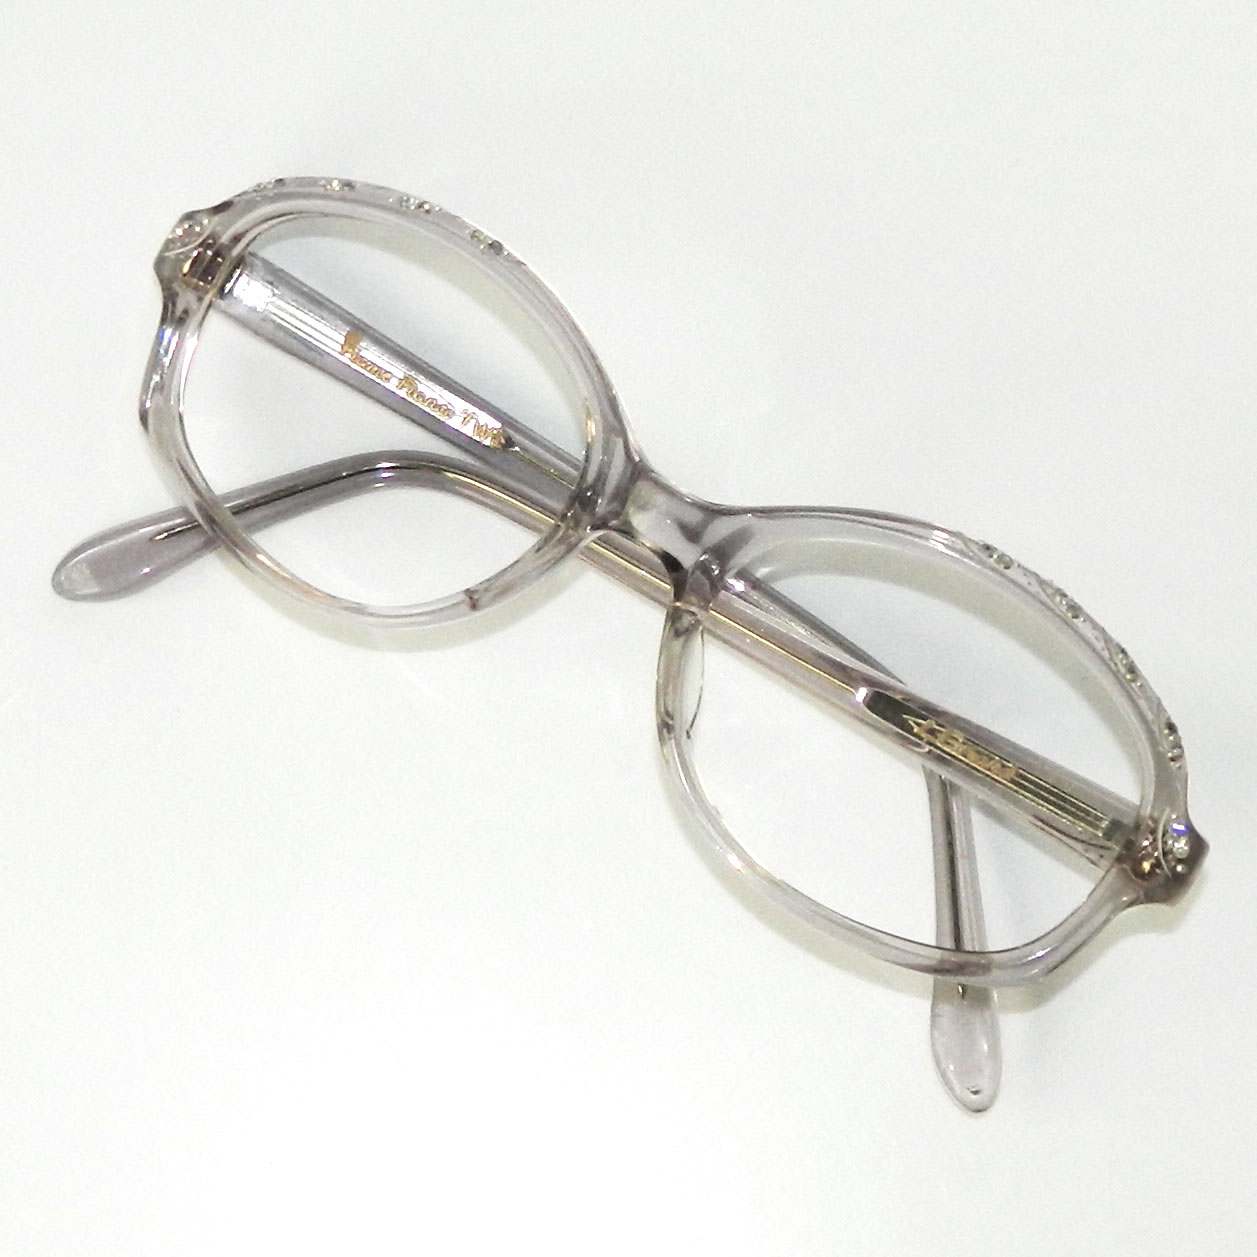 vintage eyeglasses